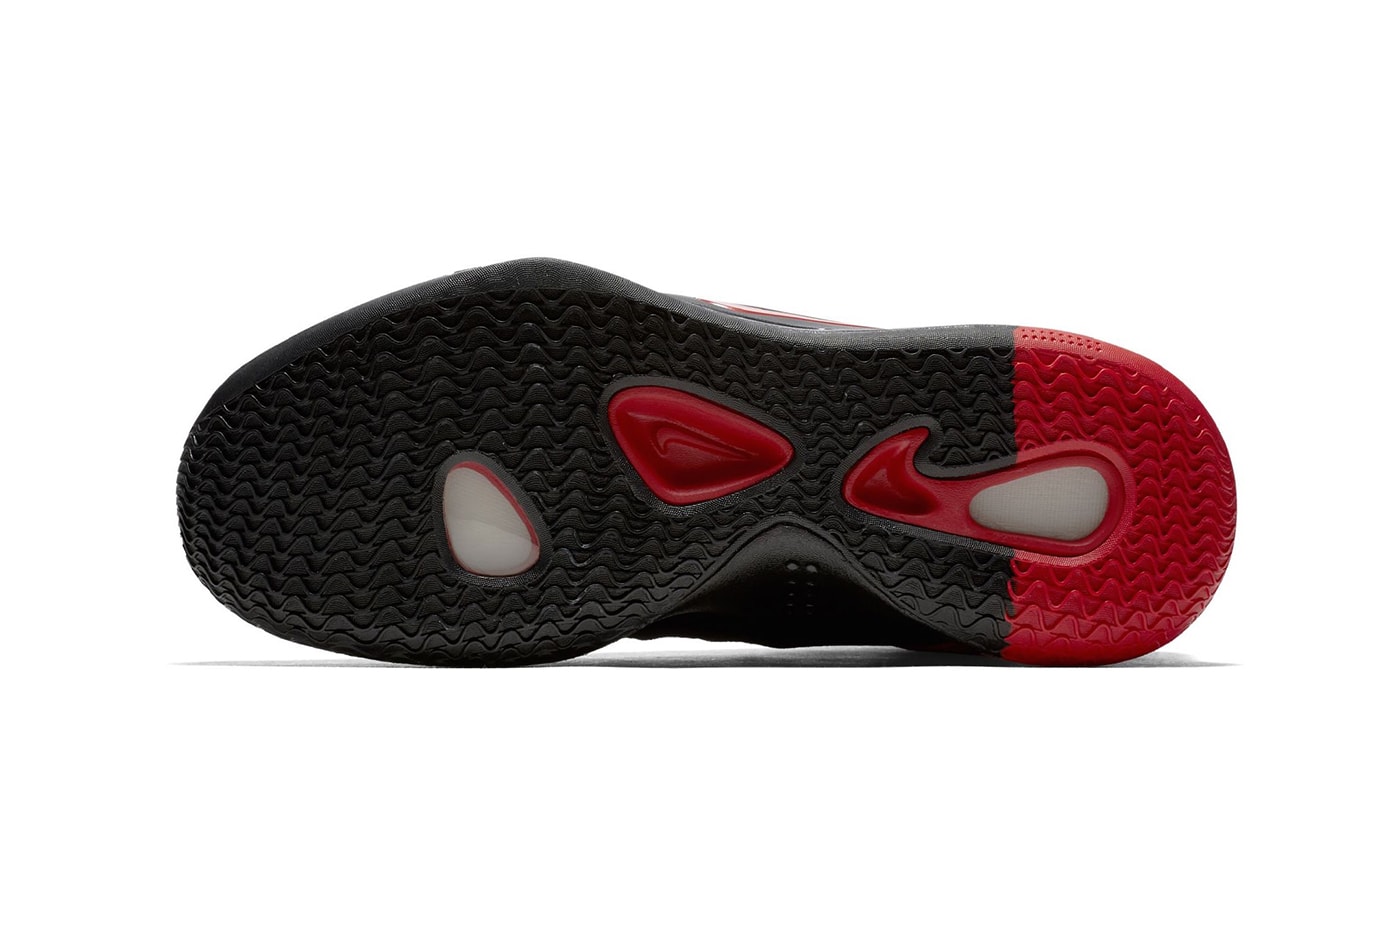 Nike Hyperdunk X Black Red summer 2018 release sneakers footwear